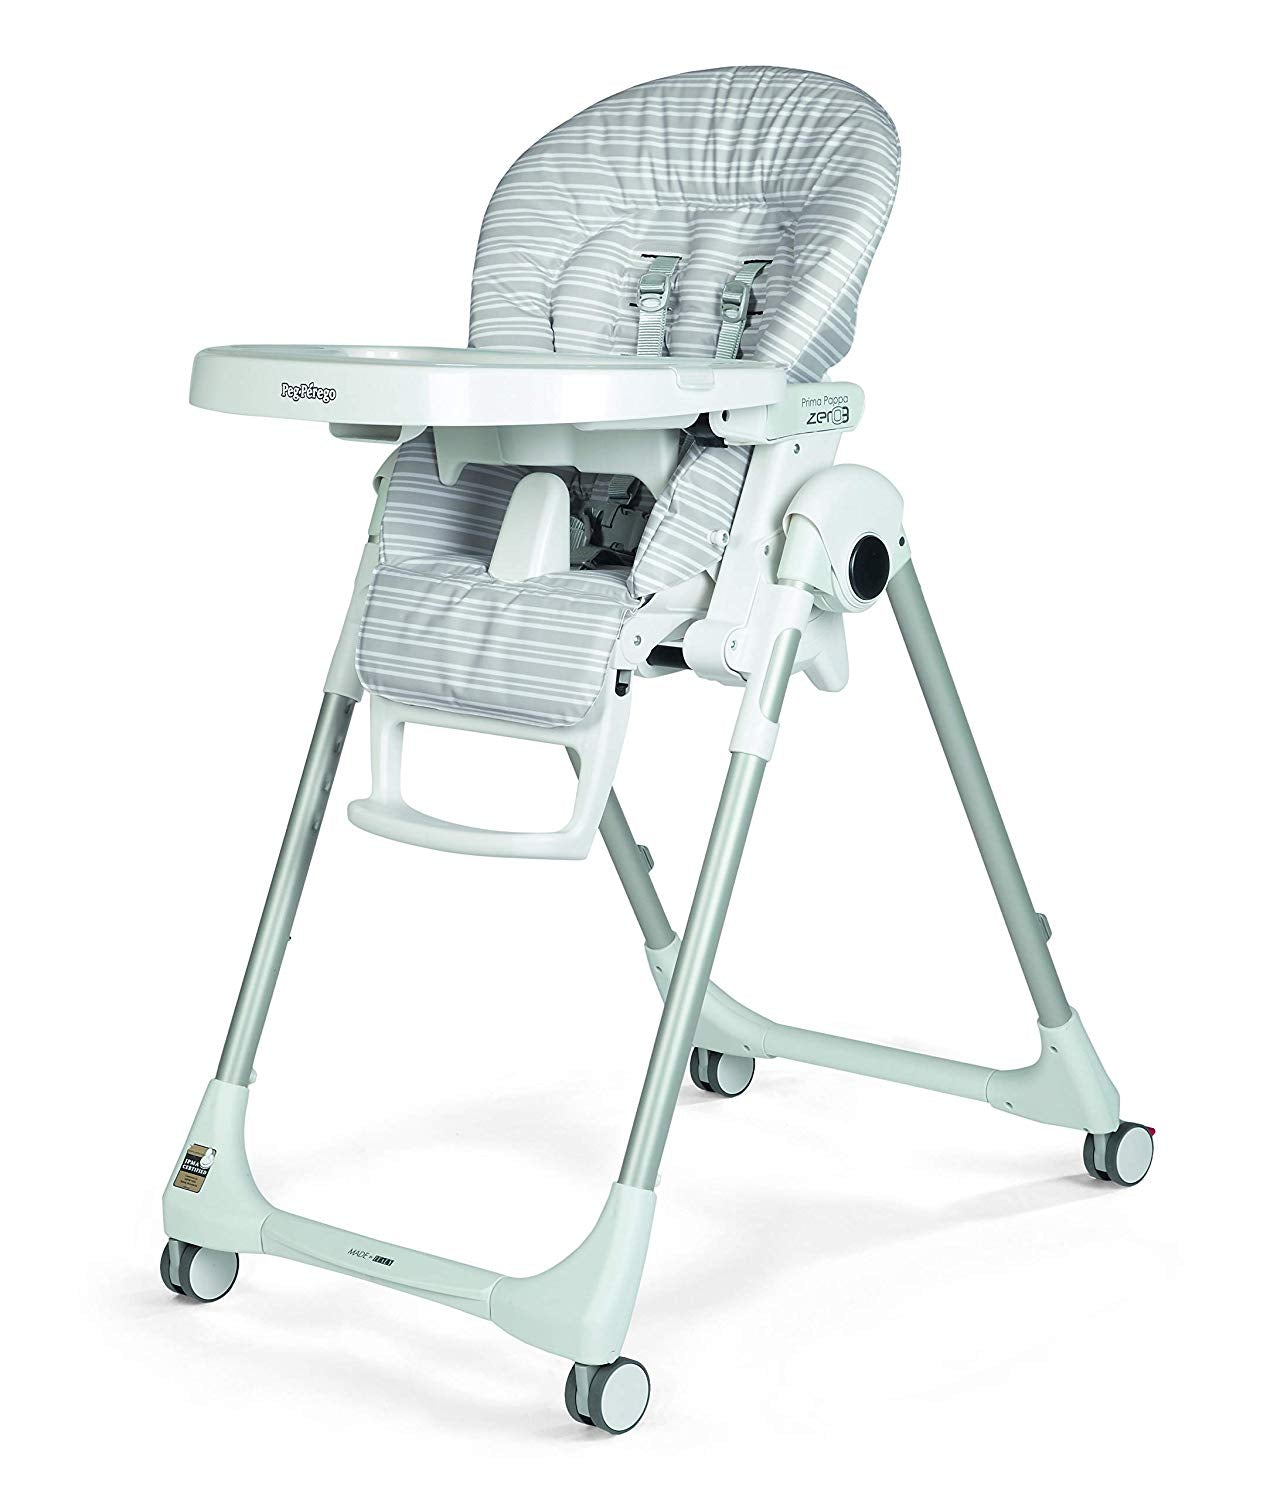 PEG PEREGO Prima Pappa Zero 3 High Chair - ANB Baby -$100 - $300